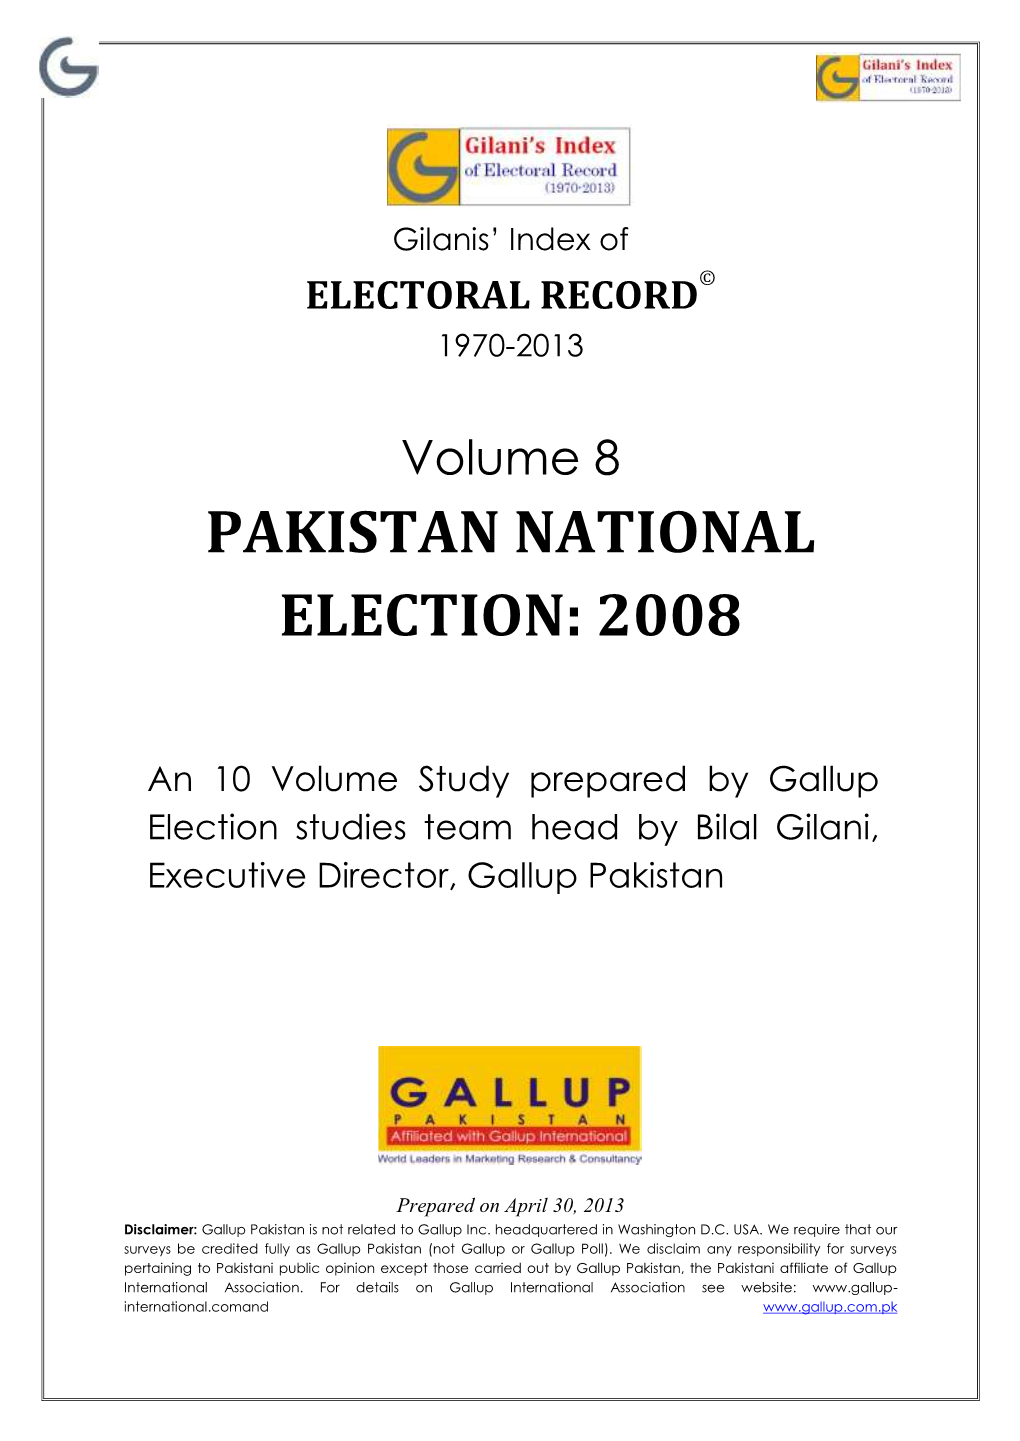 Pakistan National Election: 2008